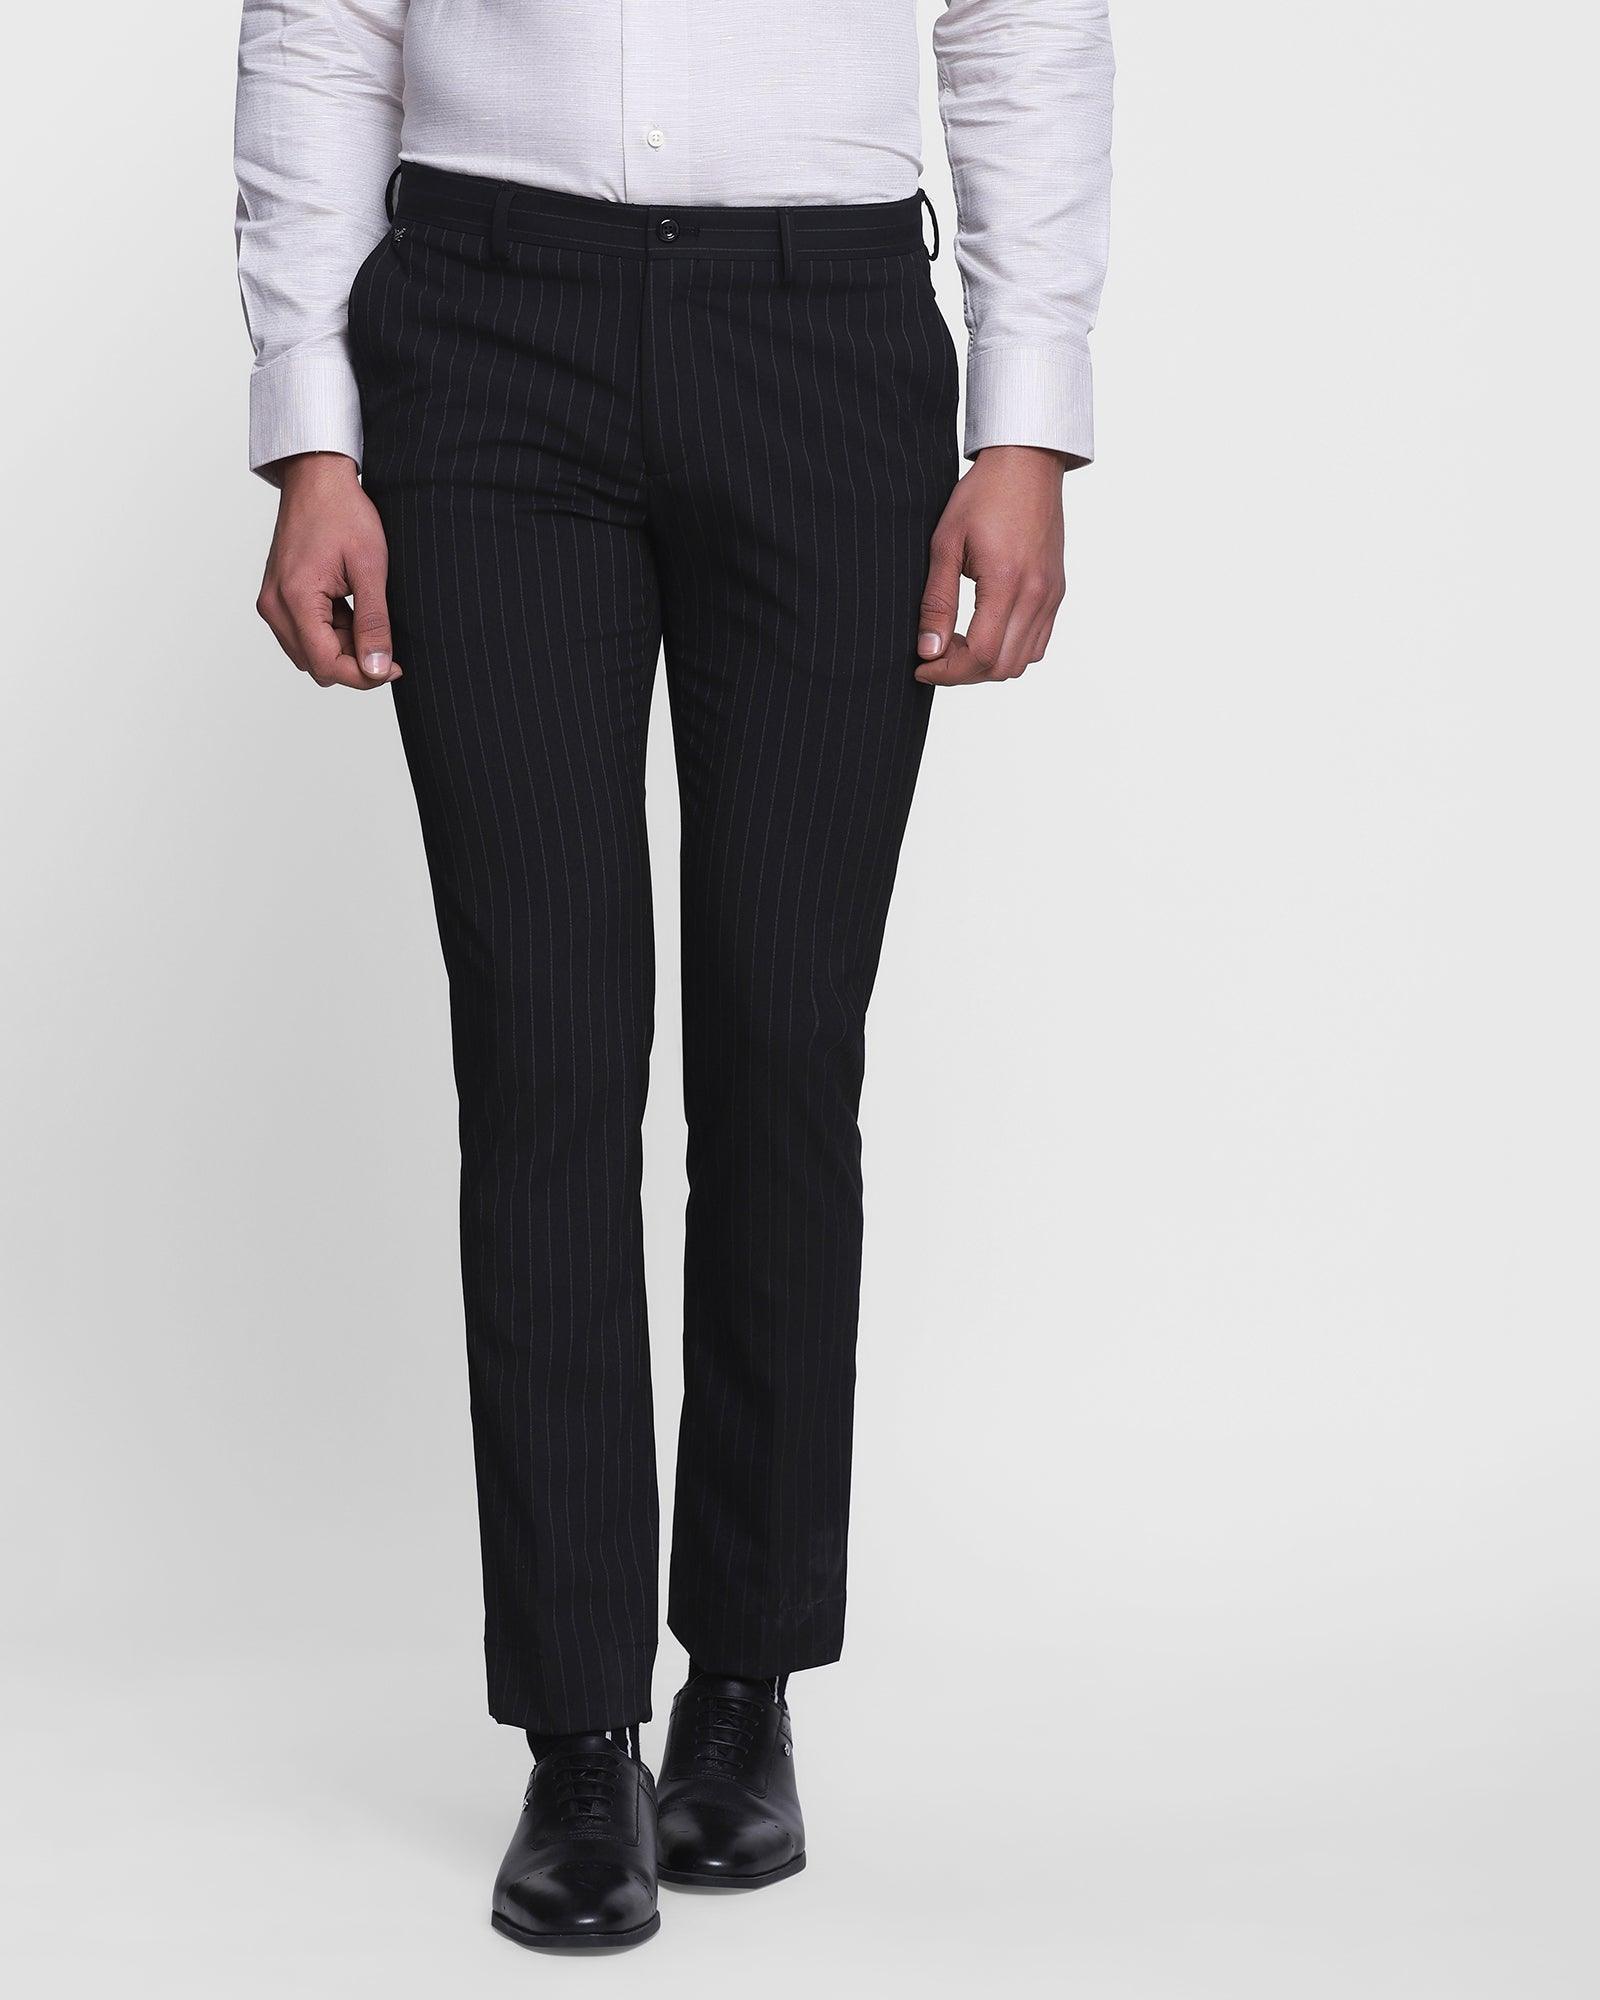 Slim Fit B-91 Formal Black Striped Trouser - Decy